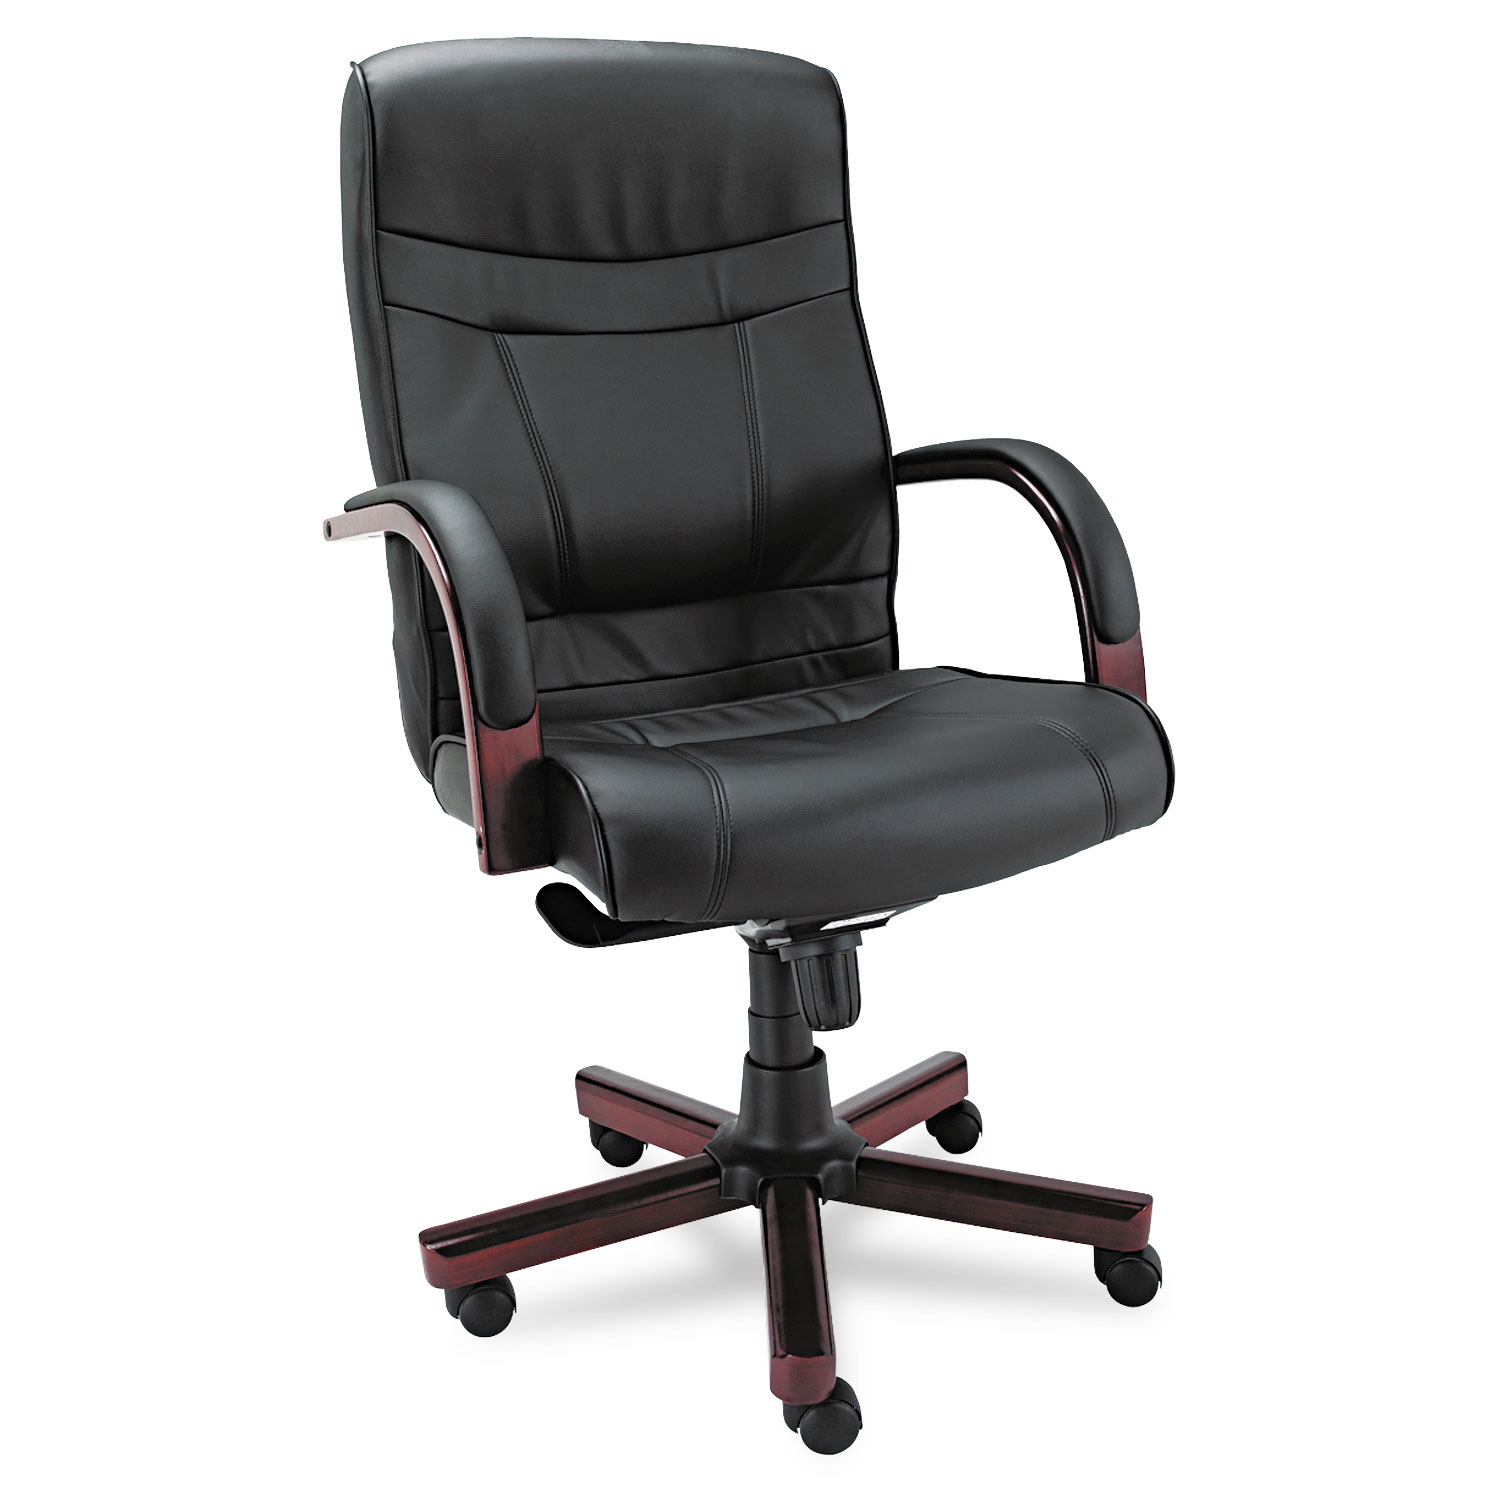  Alera ALEMA41LS10M Alera Madaris Series High-Back Knee Tilt Leather Chair with Wood Trim, Supports up to 275 lbs, Black Seat/Back, Mahogany Base (ALEMA41LS10M) 